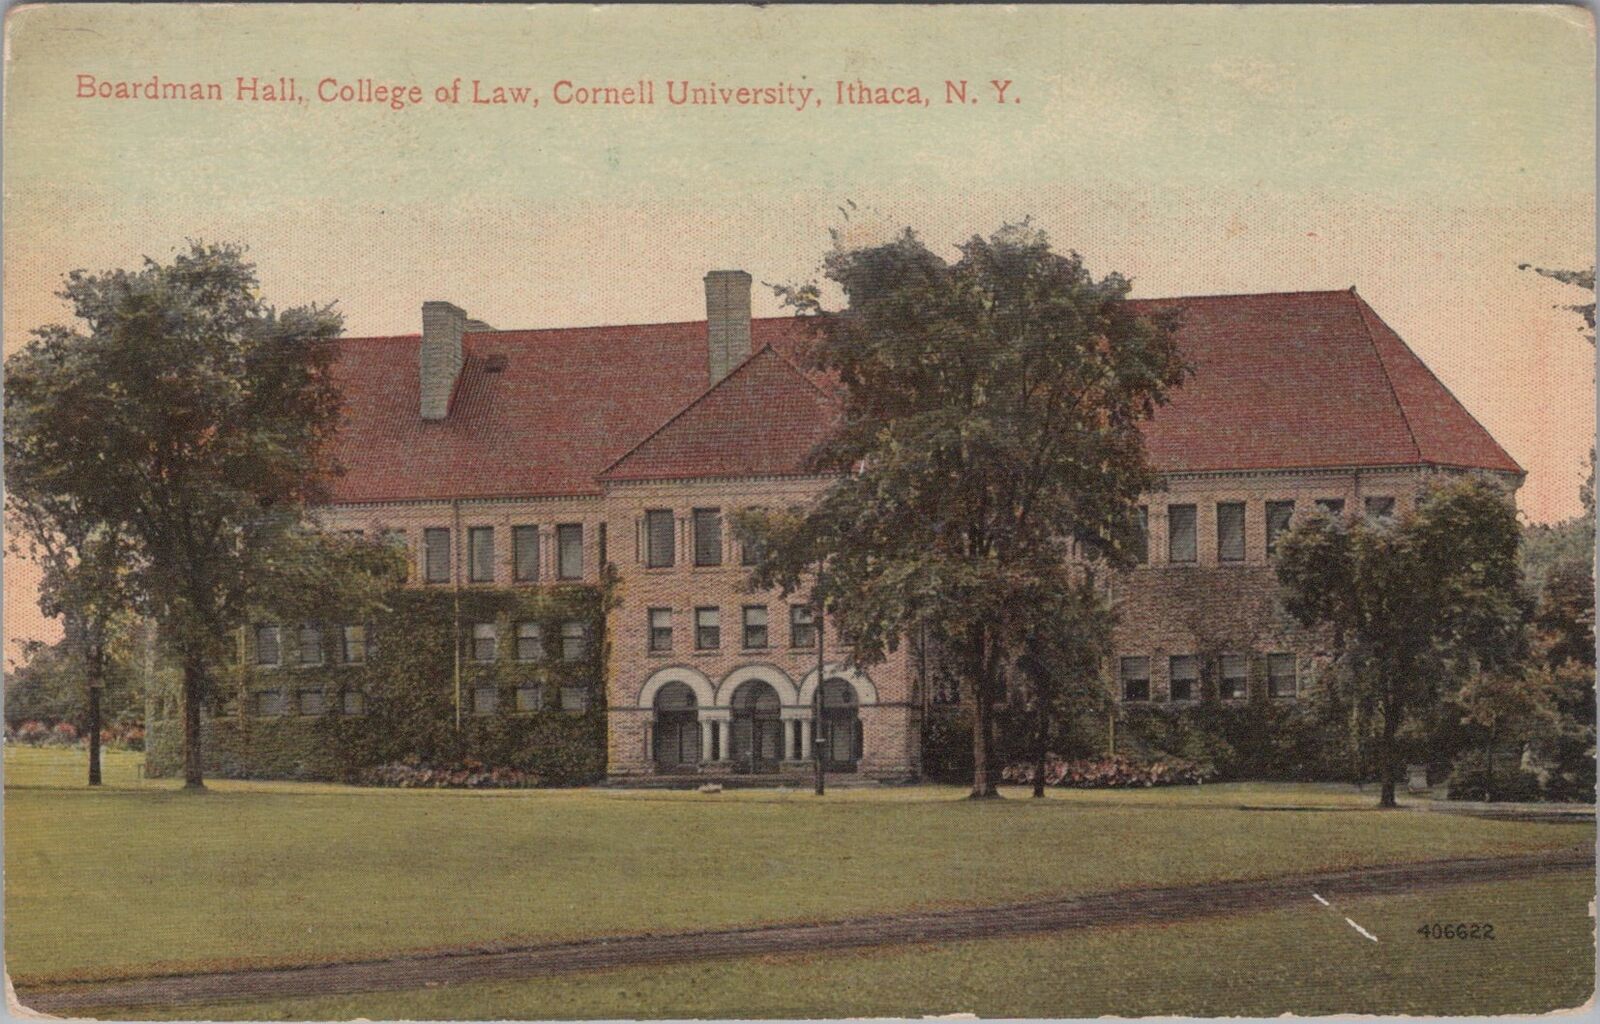 Boardman Hall, College of Law, Cornell University, Ithaca NY c1910s Postcard